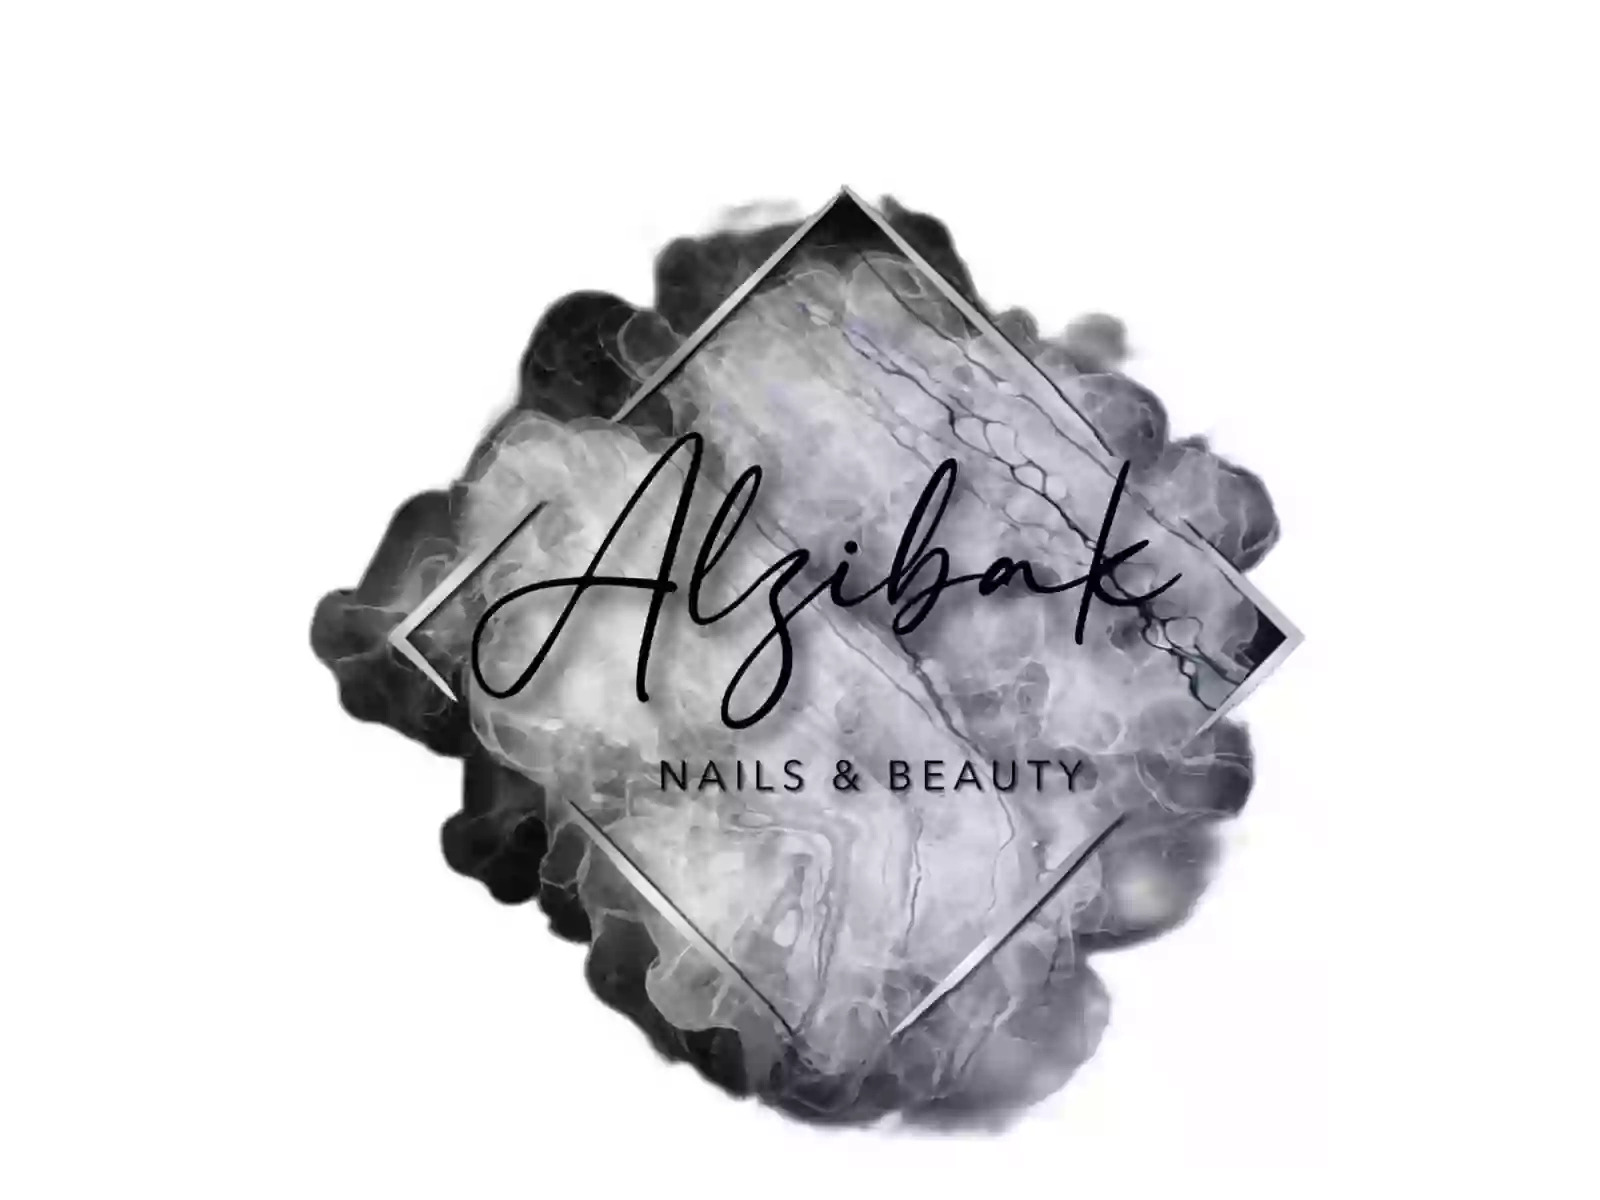 Alzibak nails and beauty